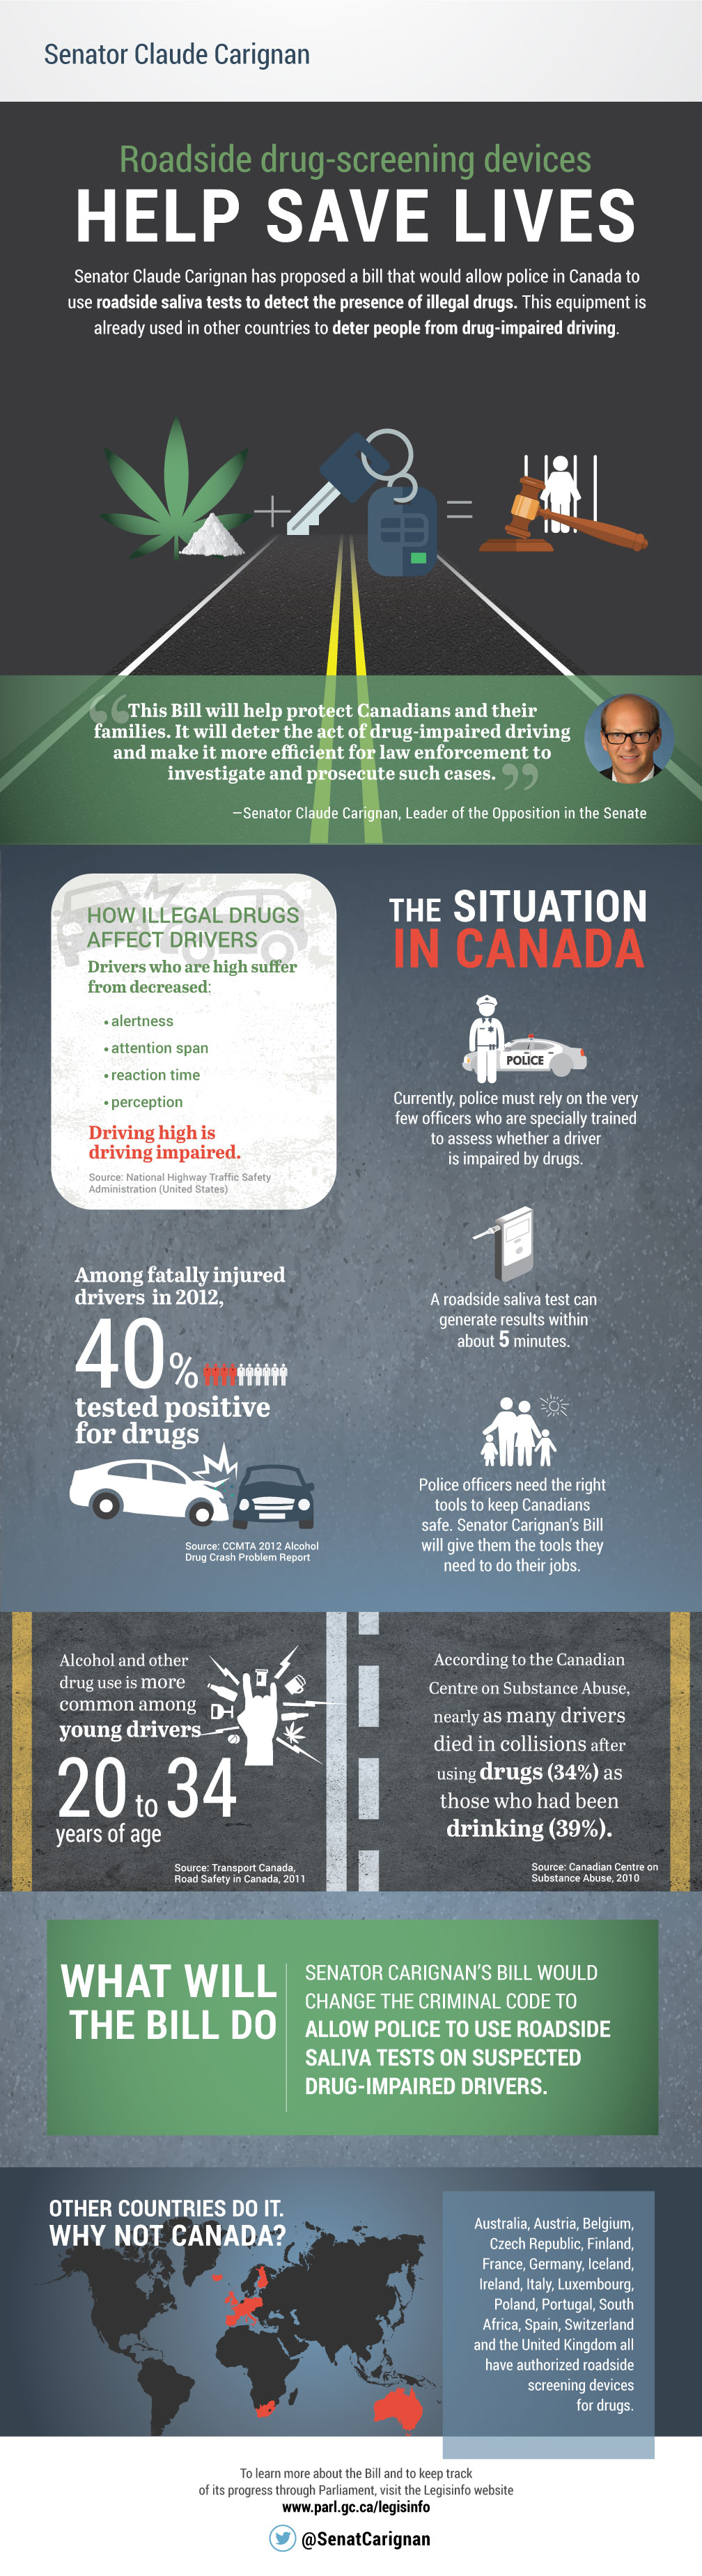 Senator Carignan's infographic on drug impaired driving